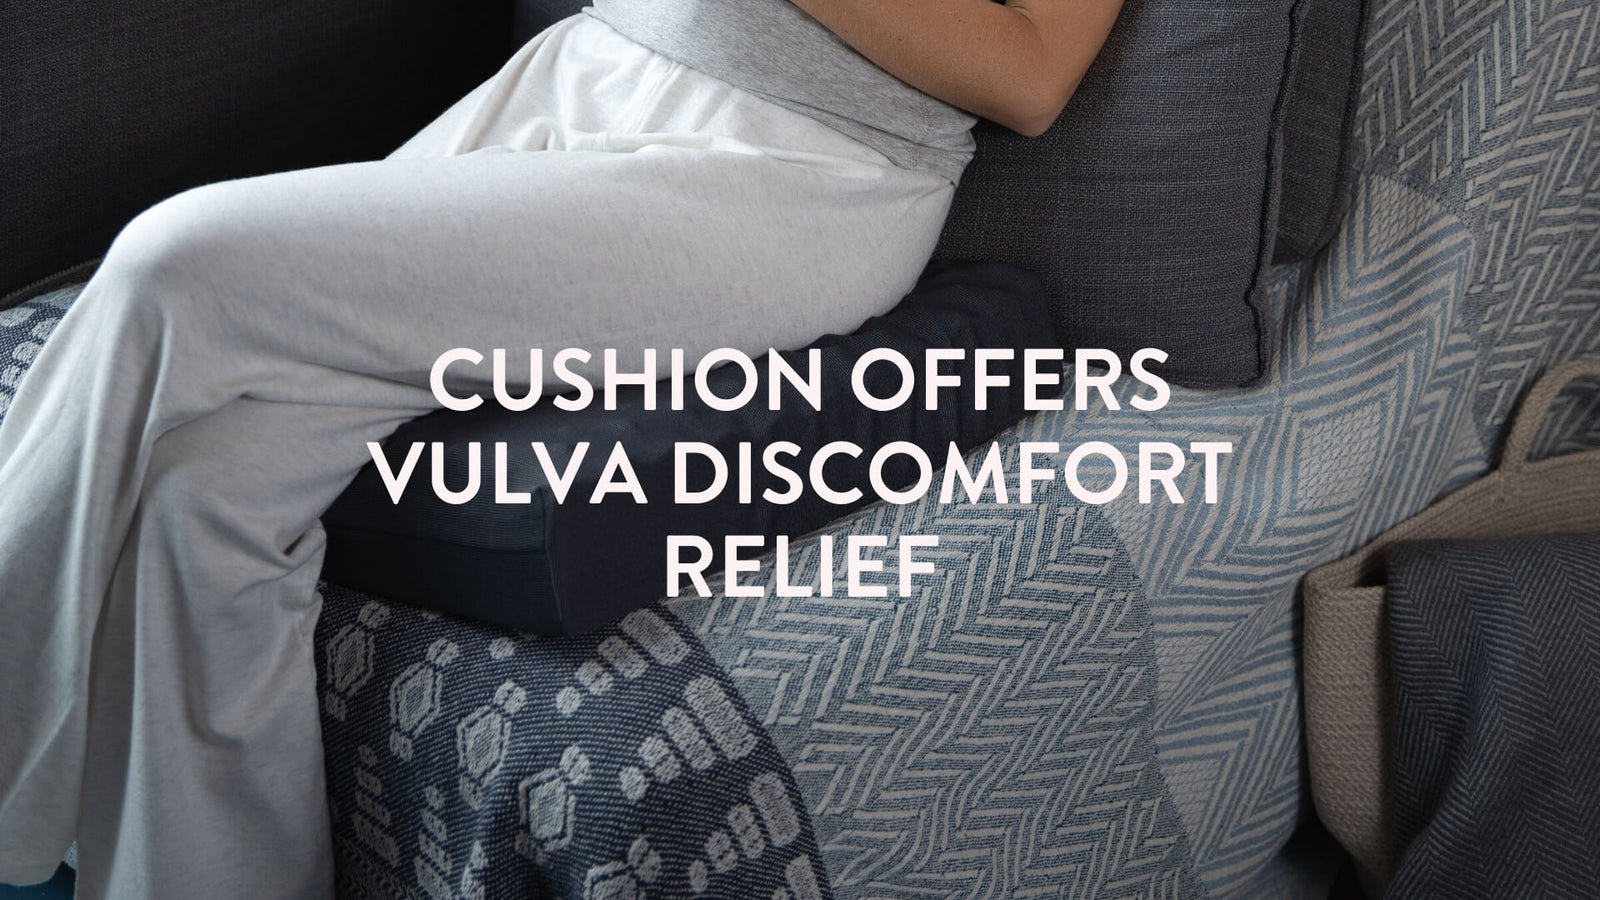 Cushion Offers Vulva Discomfort Relief